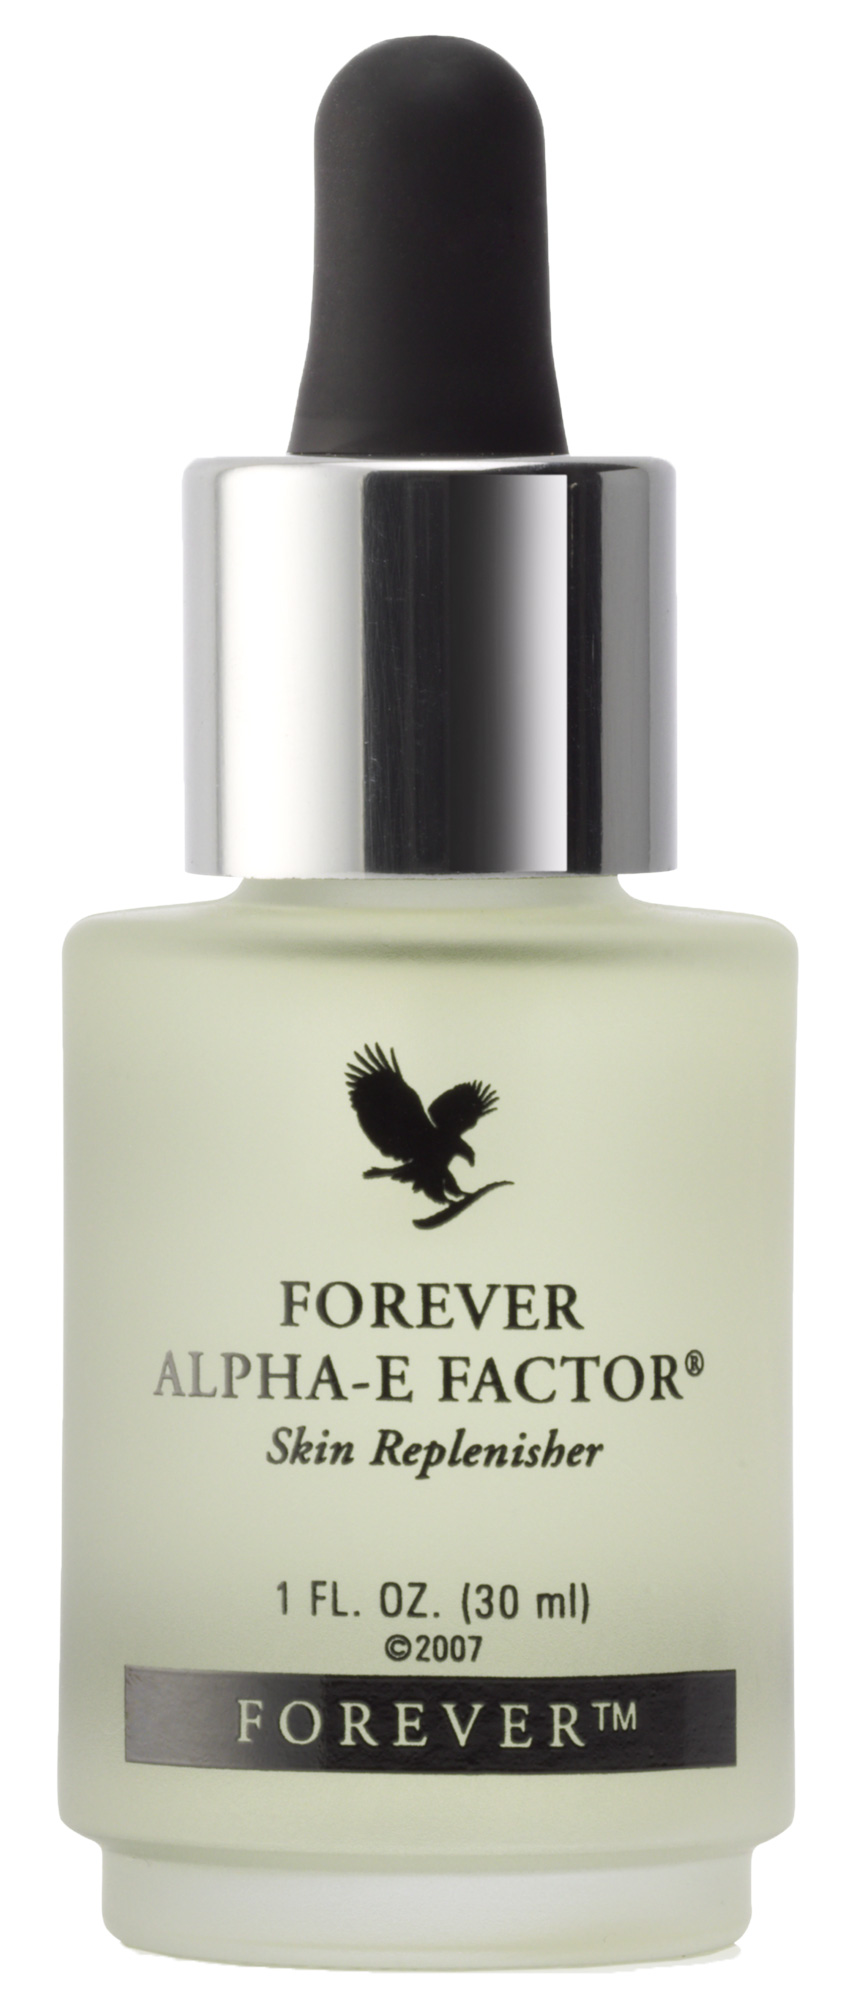 FOREVER Alpha-E Factor